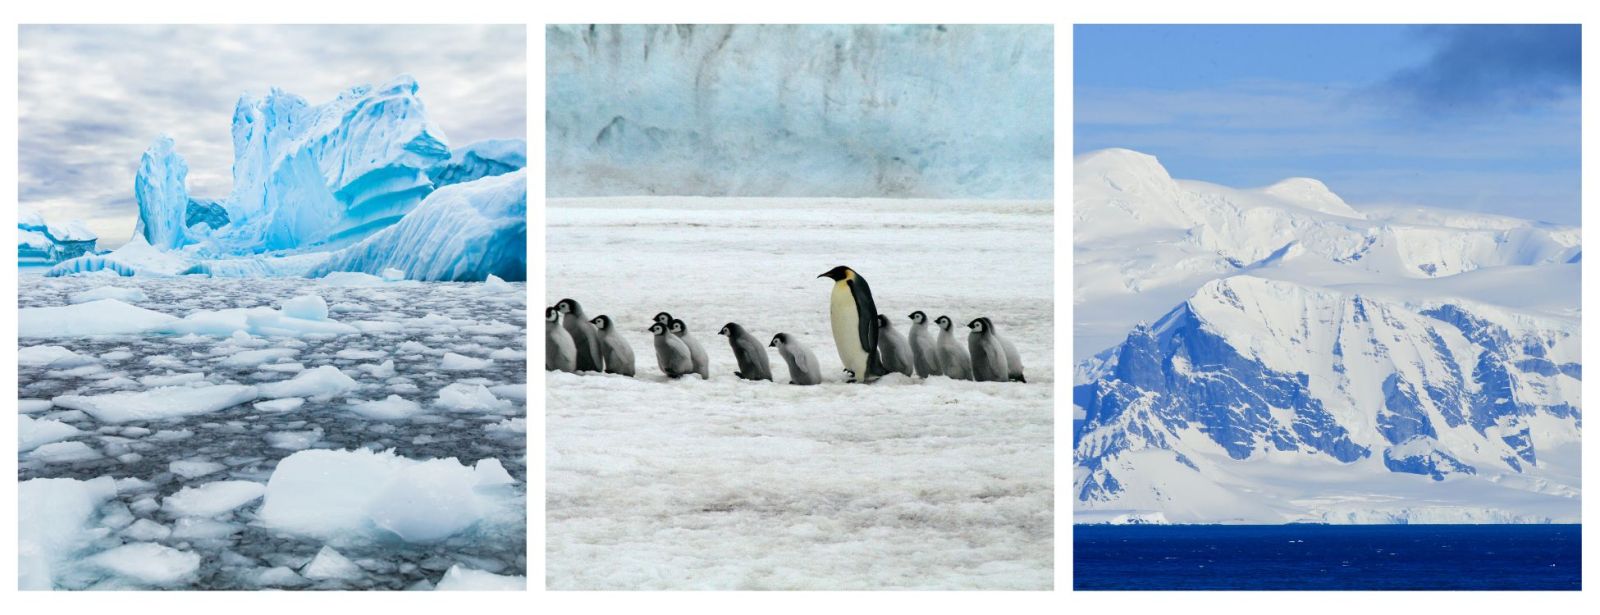 Antarctica Expedition Cruise Holidays